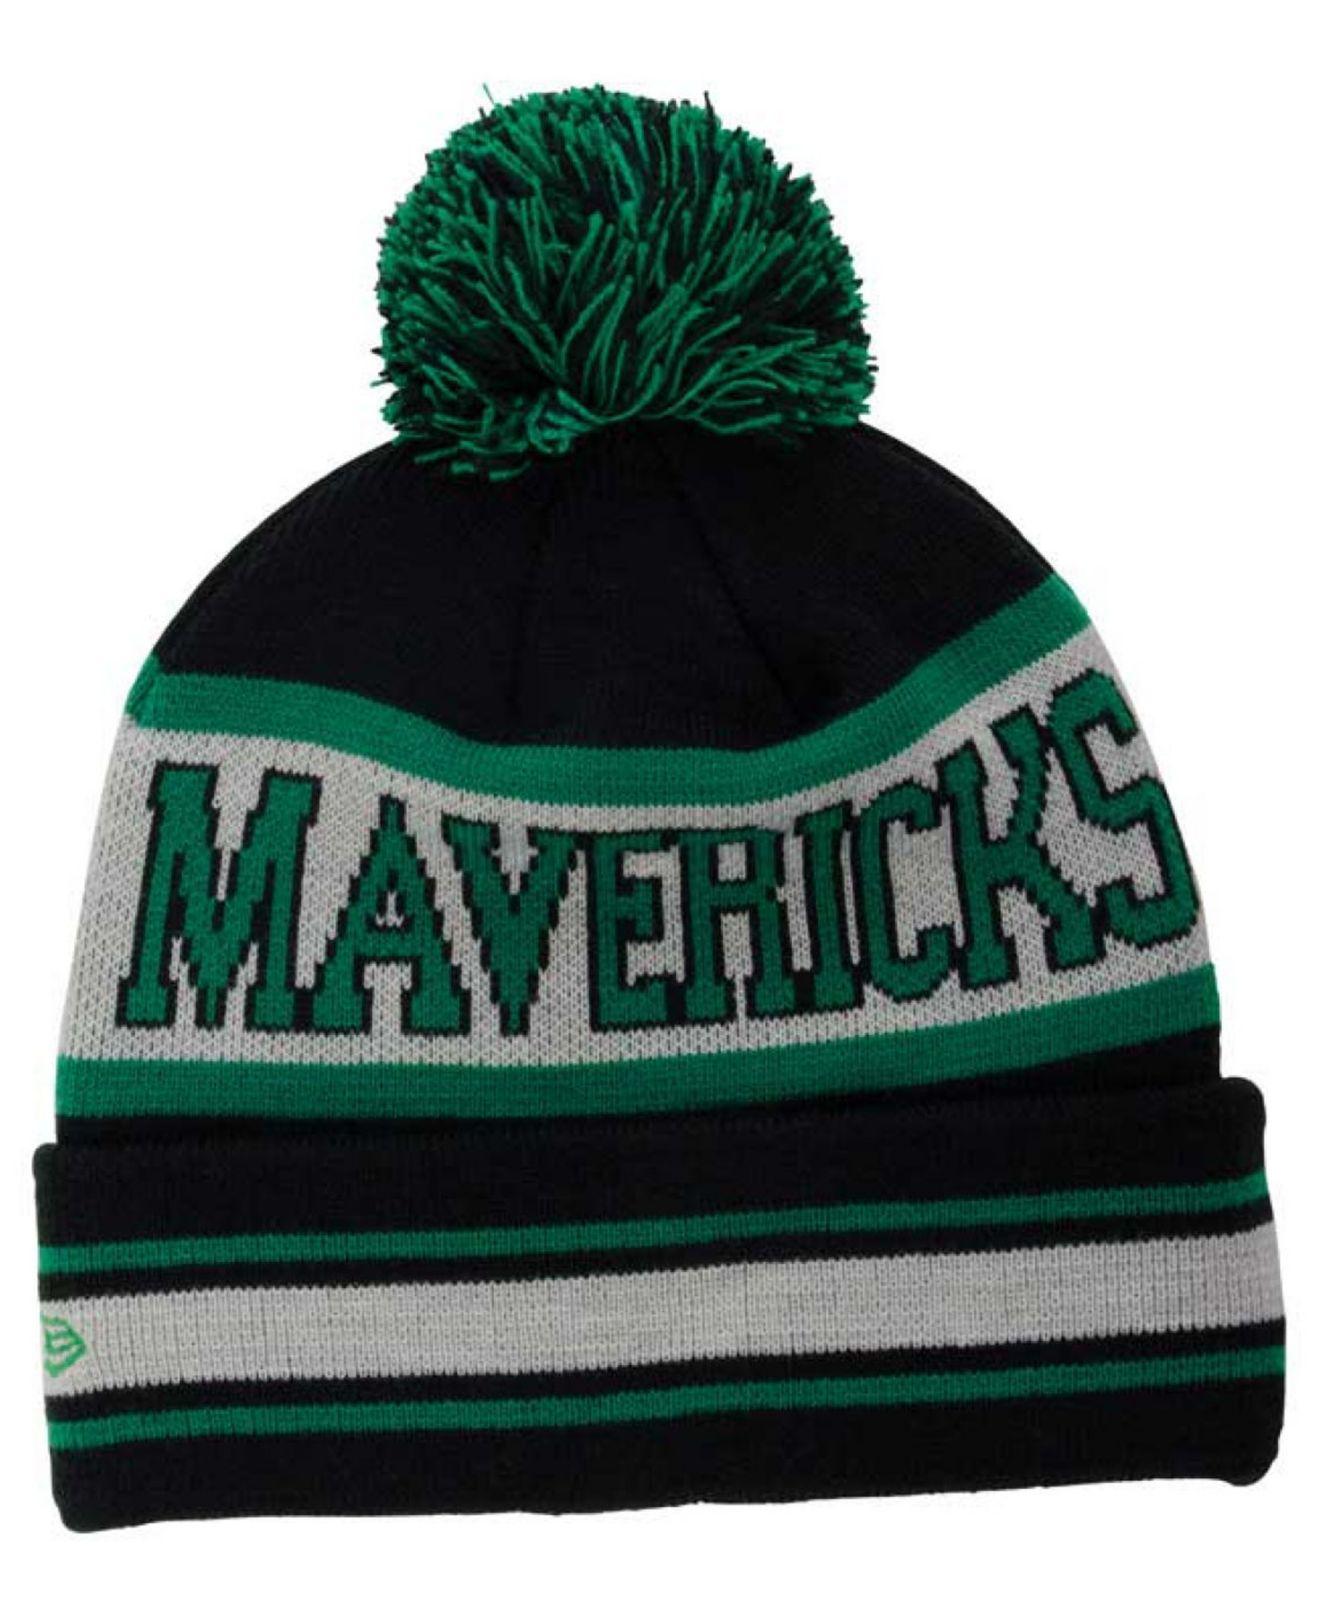 Dallas Mavericks Beanie : Dallas Mavericks Cuffed Knit Hat, Mavericks ...